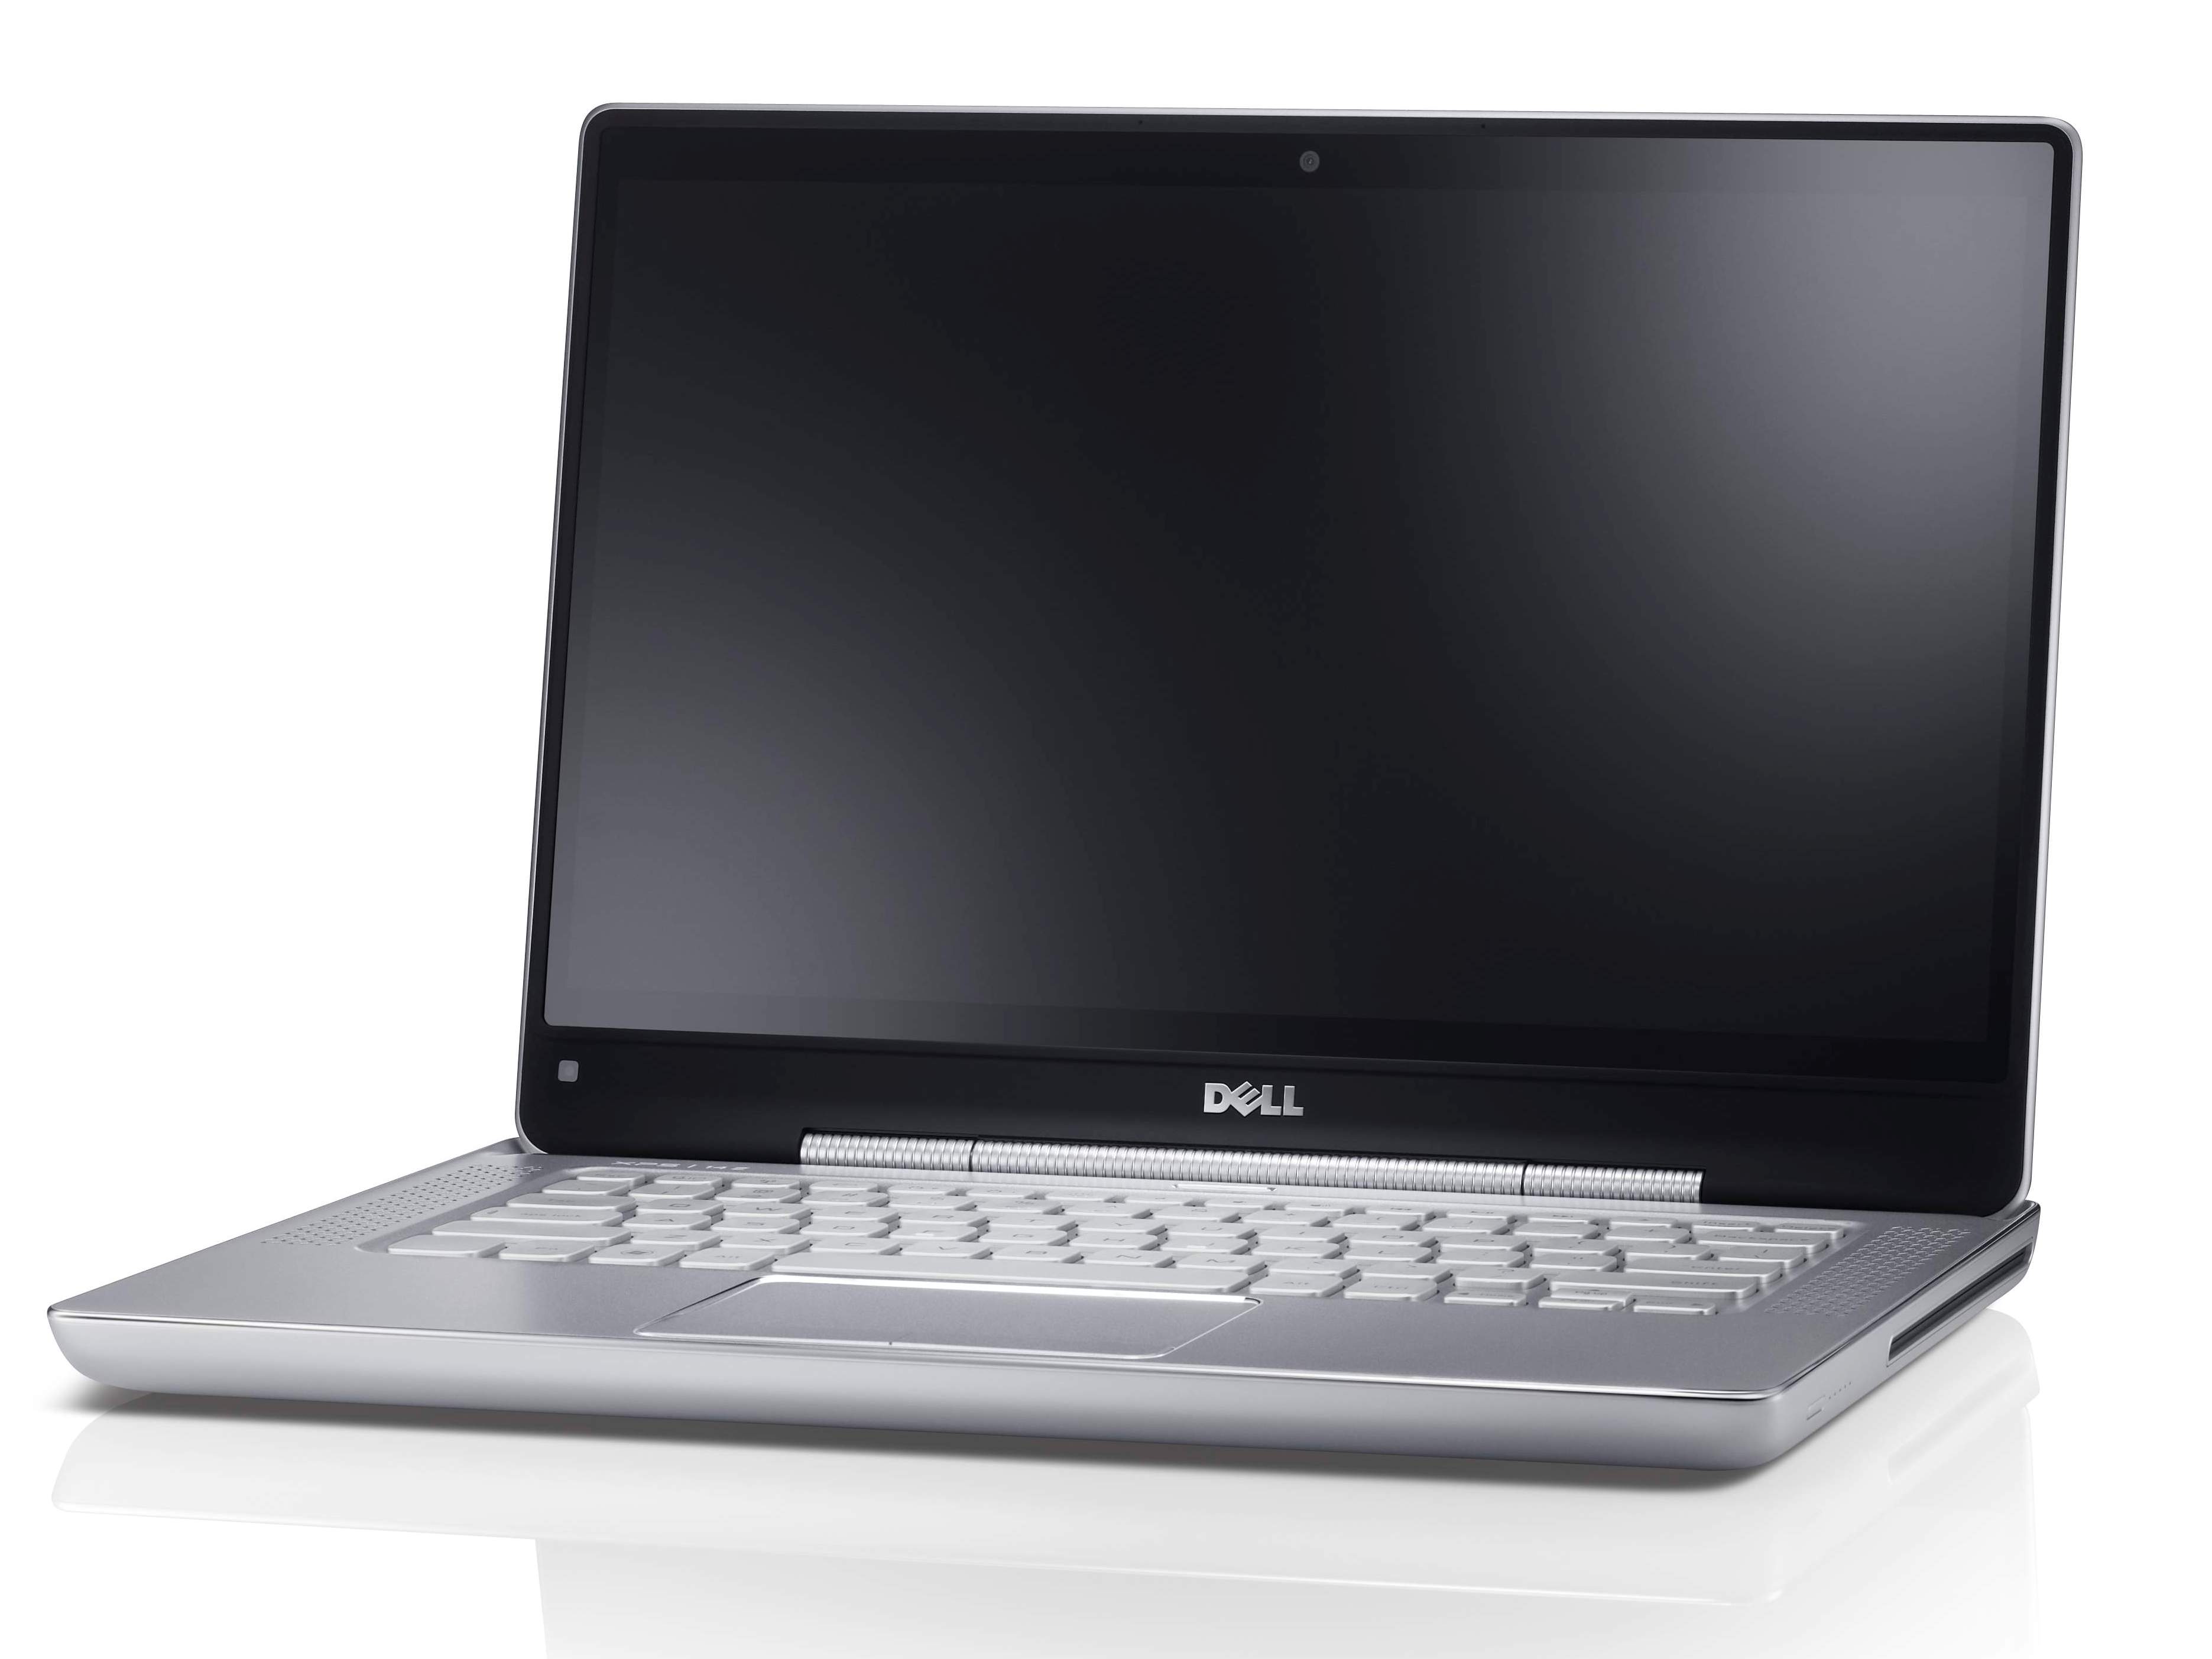 Dell XPS 14z unleashed | TechRadar